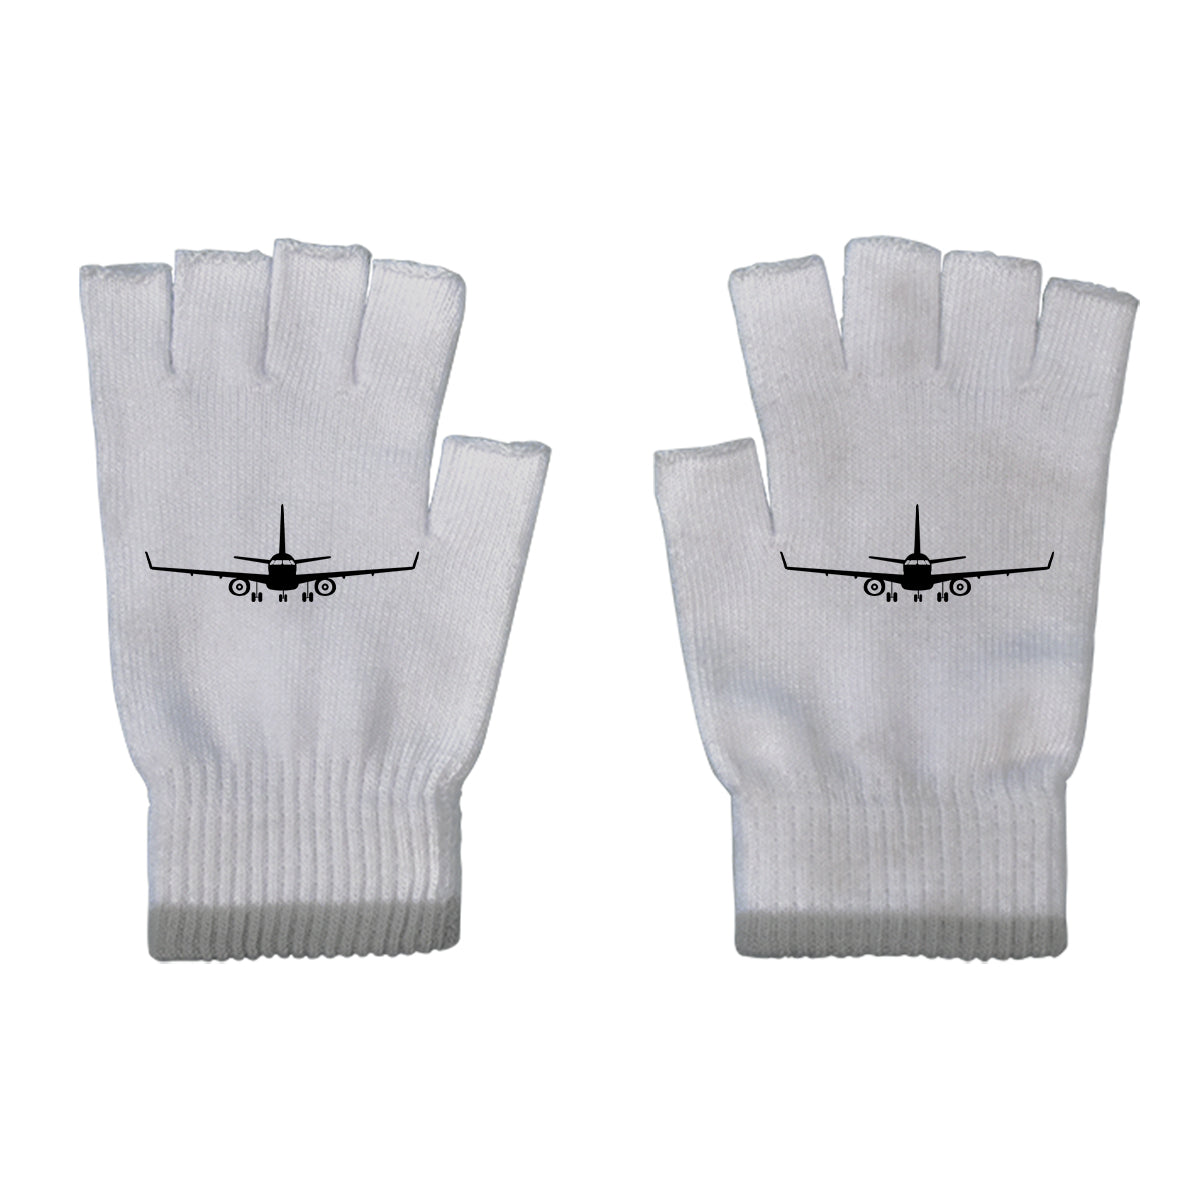 Embraer E-190 Silhouette Plane Designed Cut Gloves